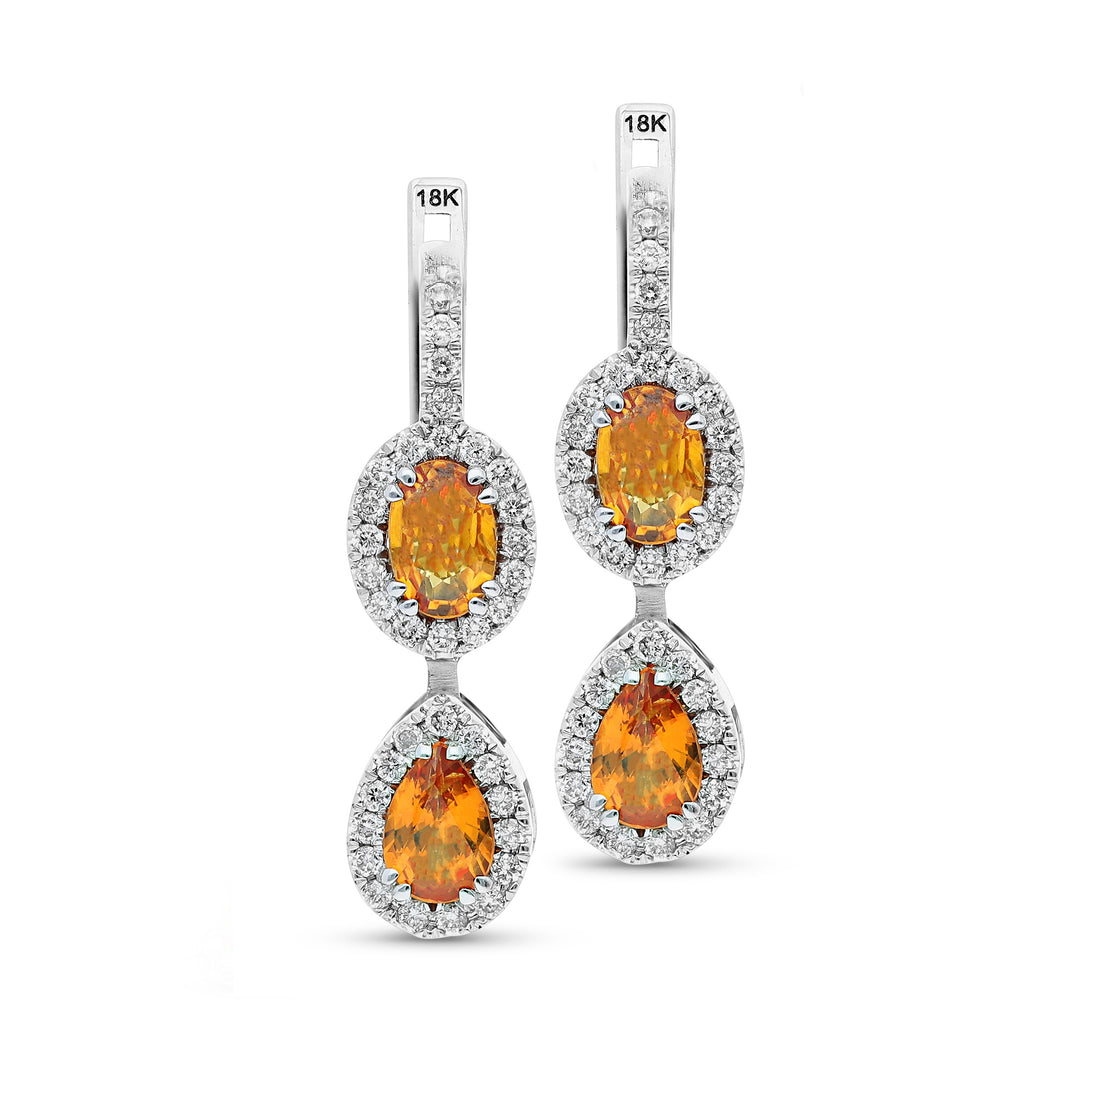 Oval and Pear Orange Sapphire Double Drop Earrings - 3.3 Carat